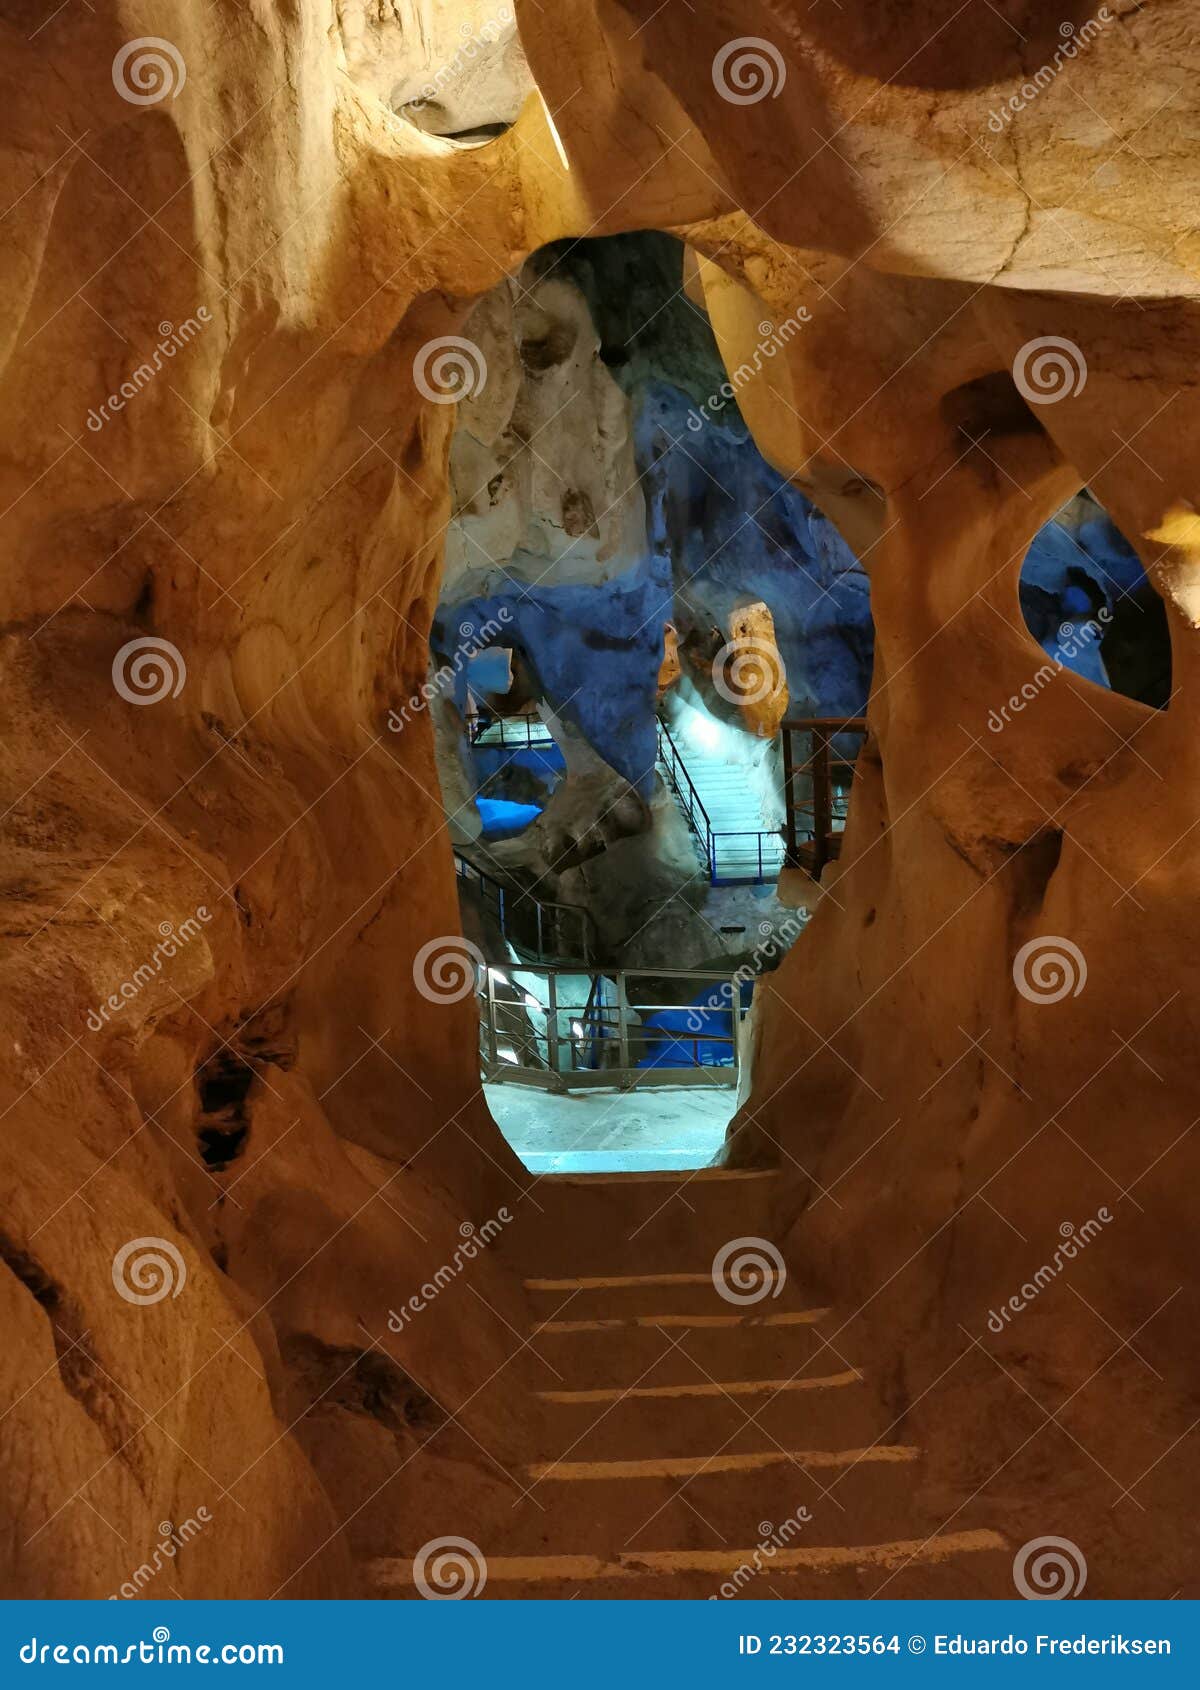 la cala del moral, spain - april 22, 2021: view of cueva del tesoro cave in mÃÂ¡laga